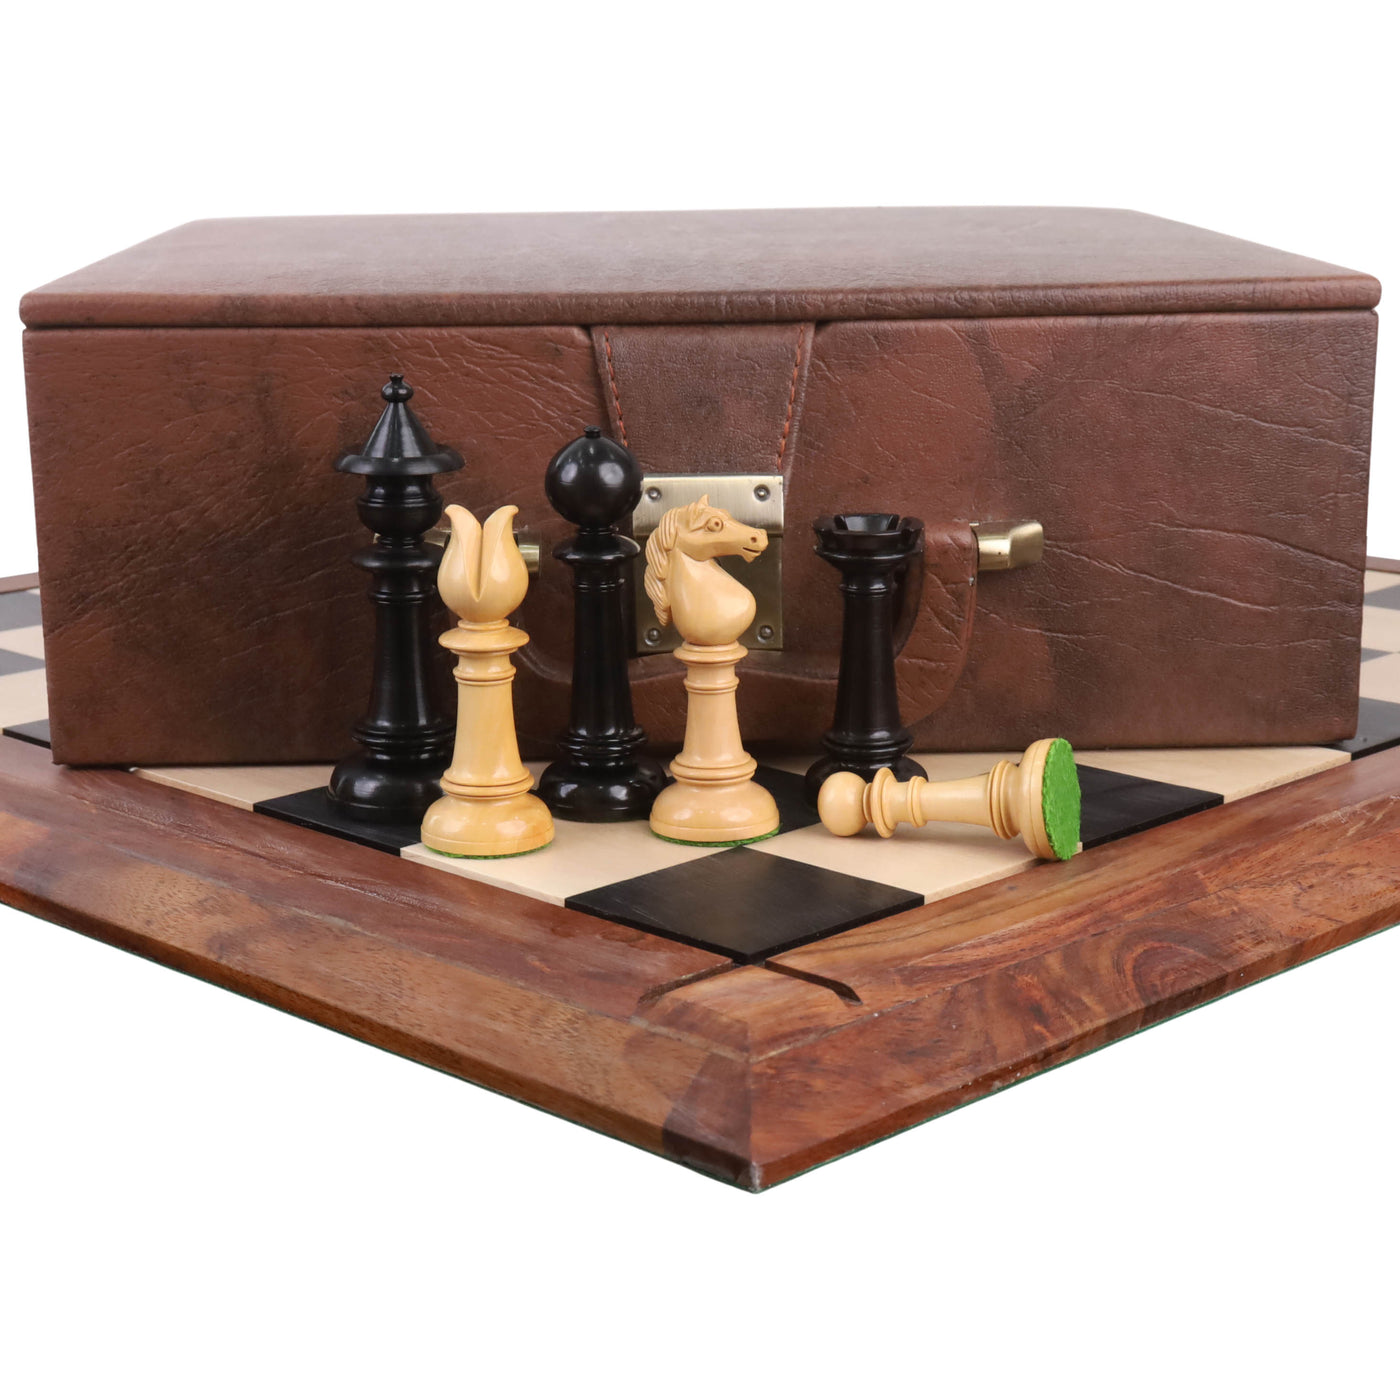 4" Edinburgh Northern Upright Pre-Staunton Chess Set - Chess Pieces Only - Ebony Wood